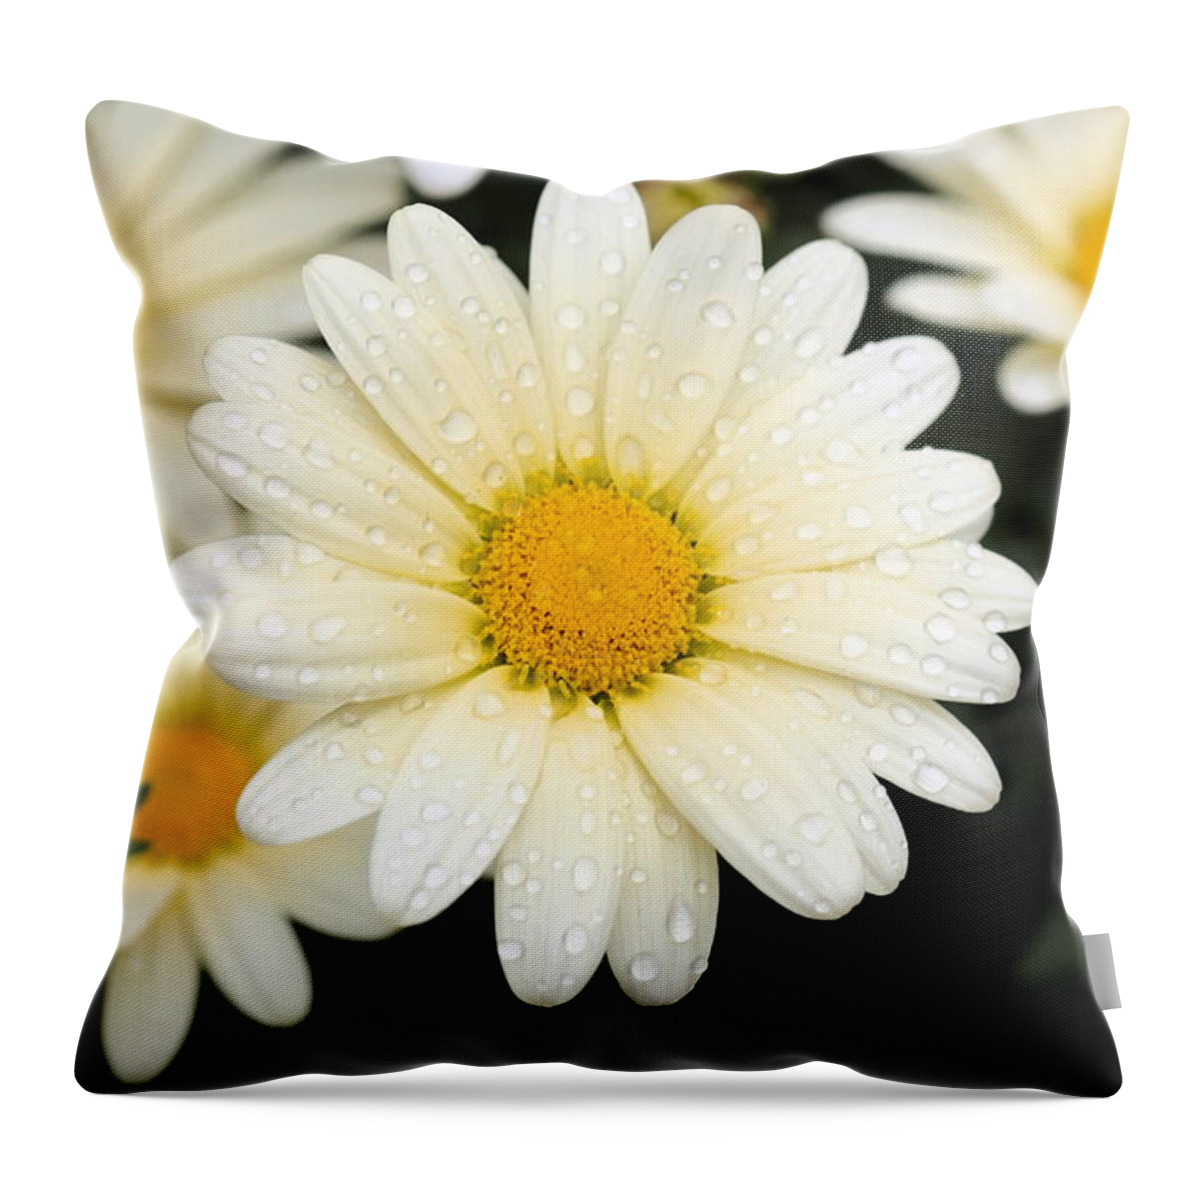 Daisy Throw Pillow featuring the photograph Daisy by Angela Rath